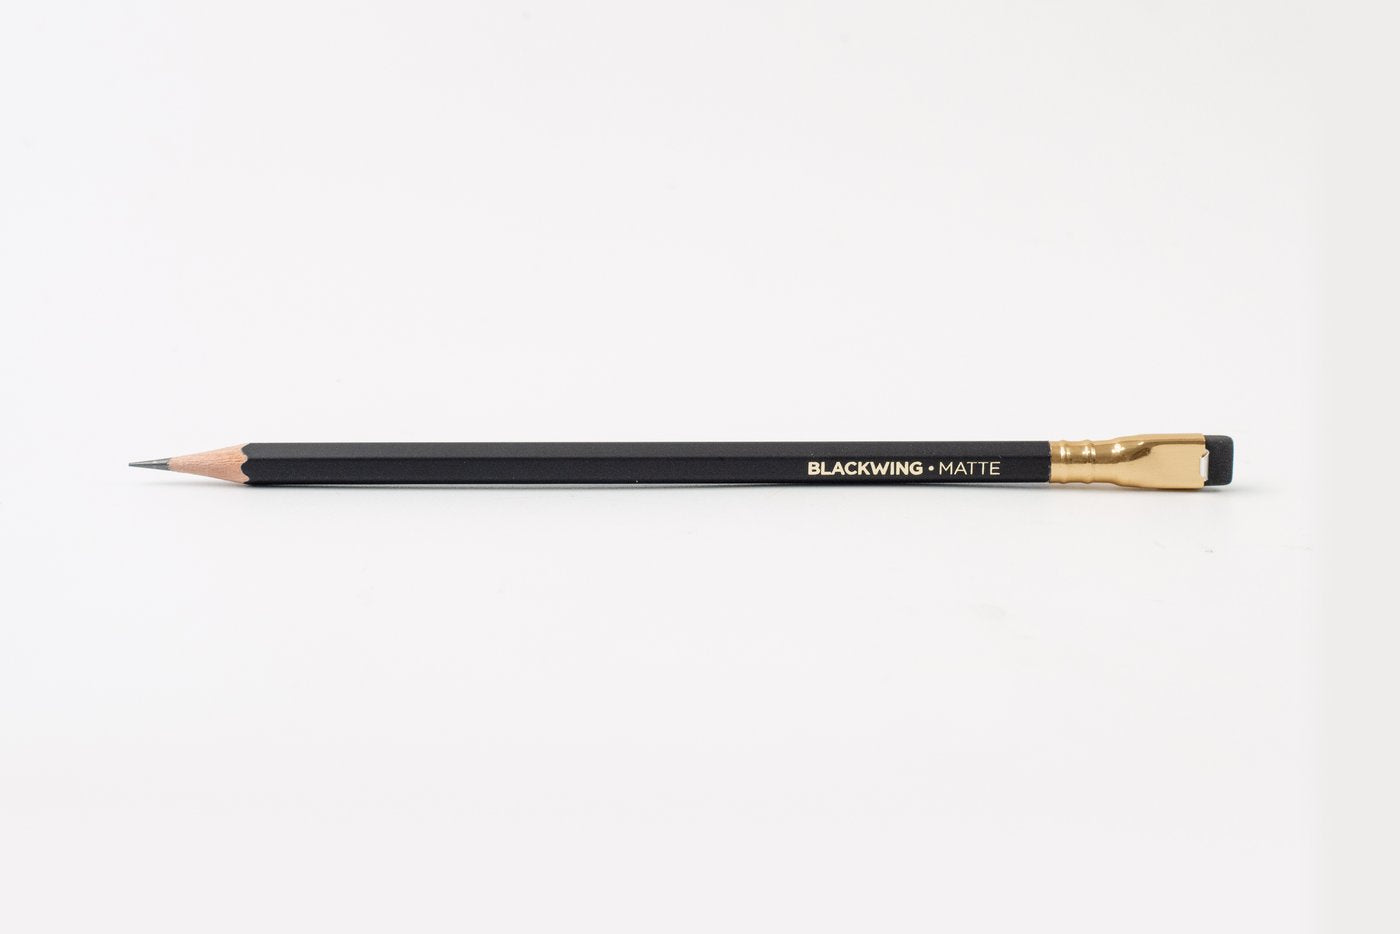 Blackwing Matte | soft black-graphite pencil with eraser - Lifestory - Blackwing